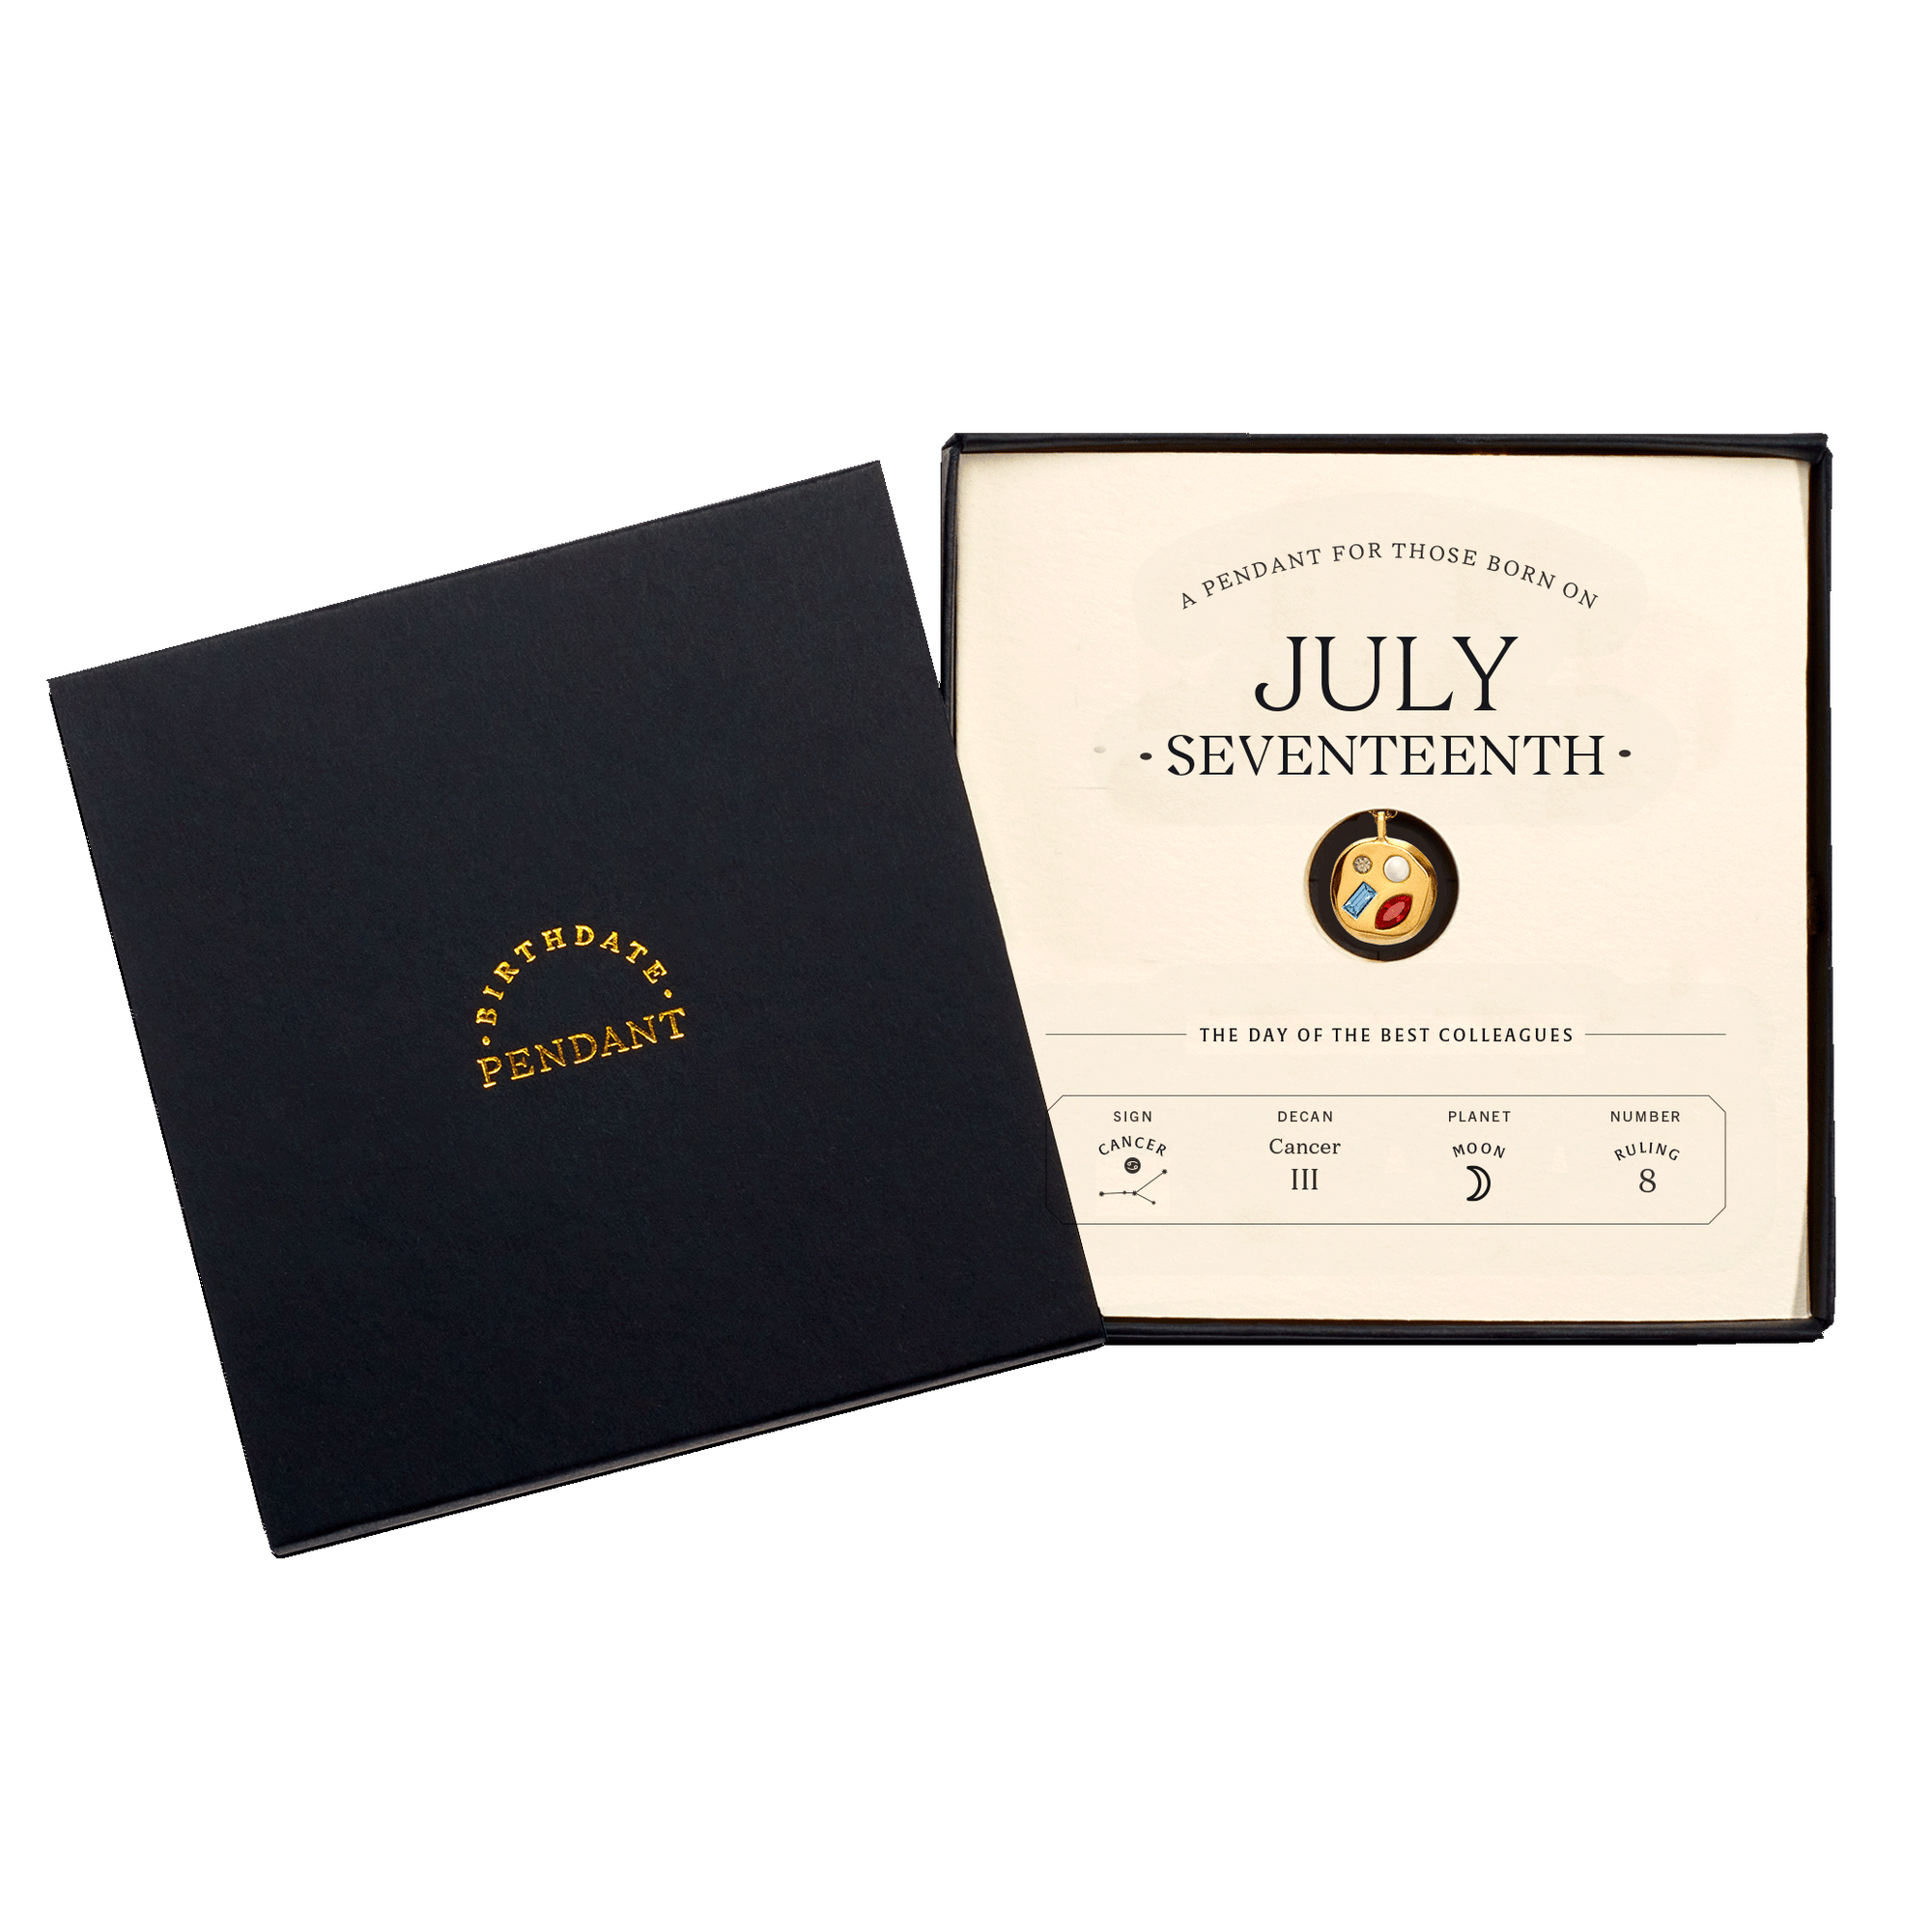 The July Seventeenth Pendant inside its box